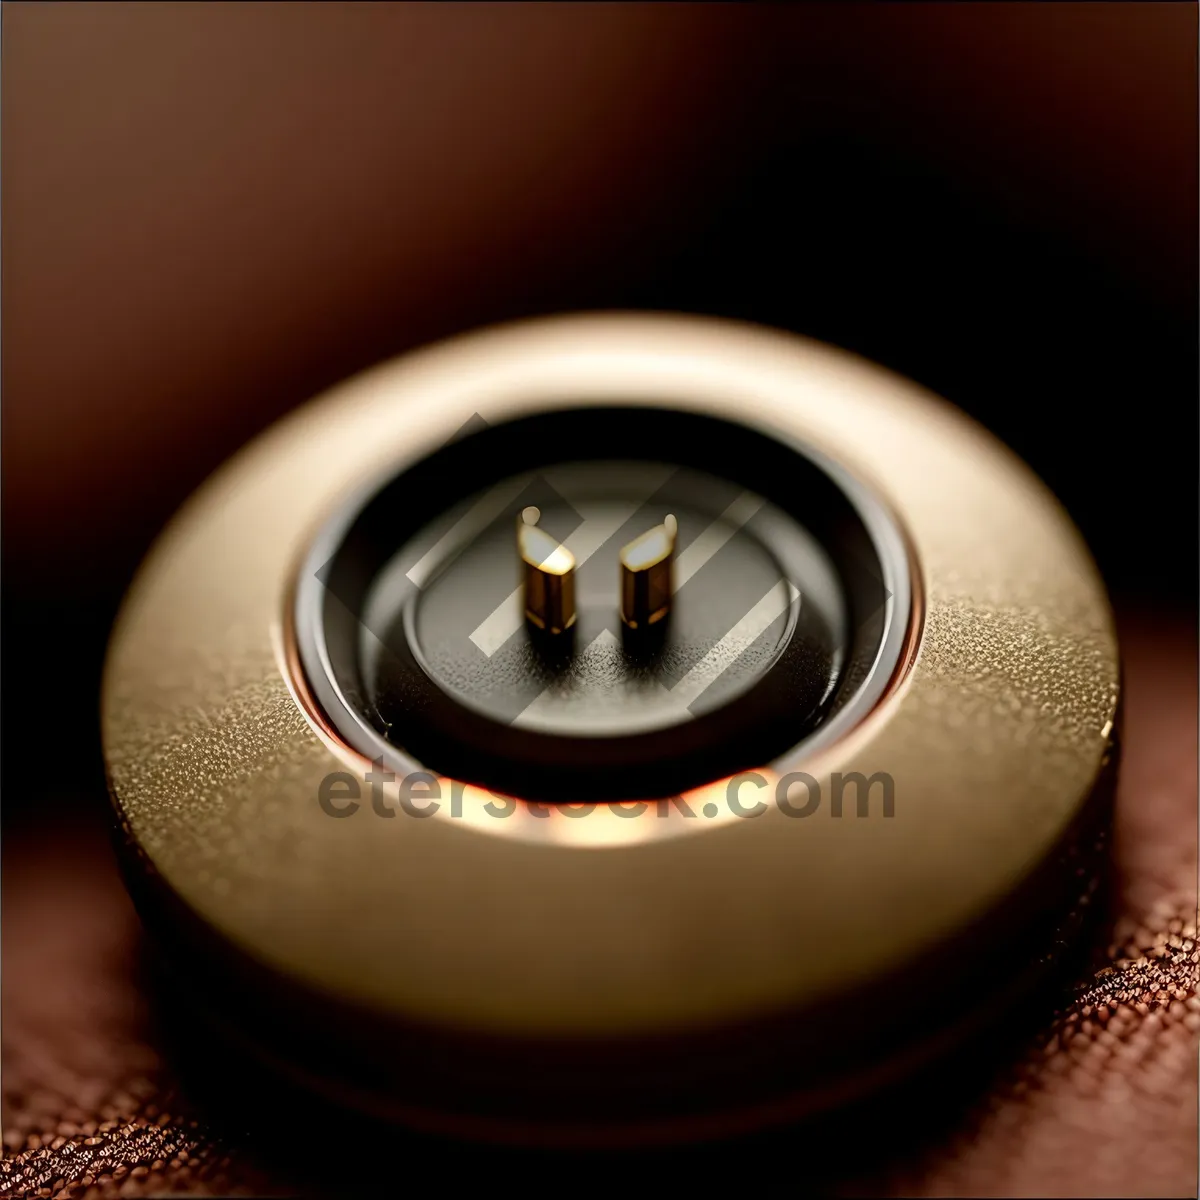 Picture of Black Lens Cap: Protective Aperture Regulator Cover